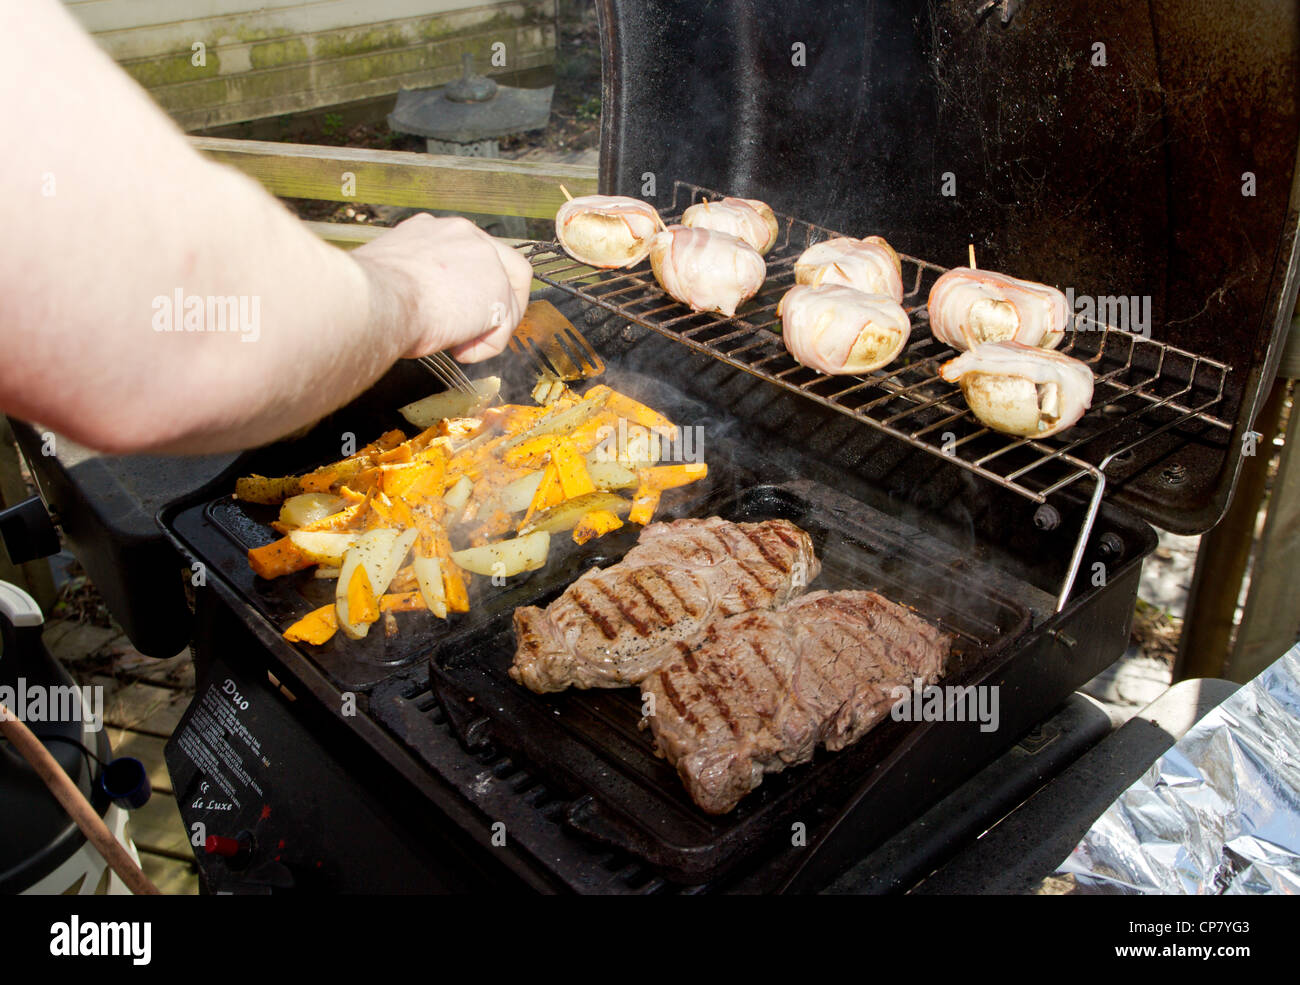 man grilling mushrooms,beacon,beef and potato Stock Photo - Alamy